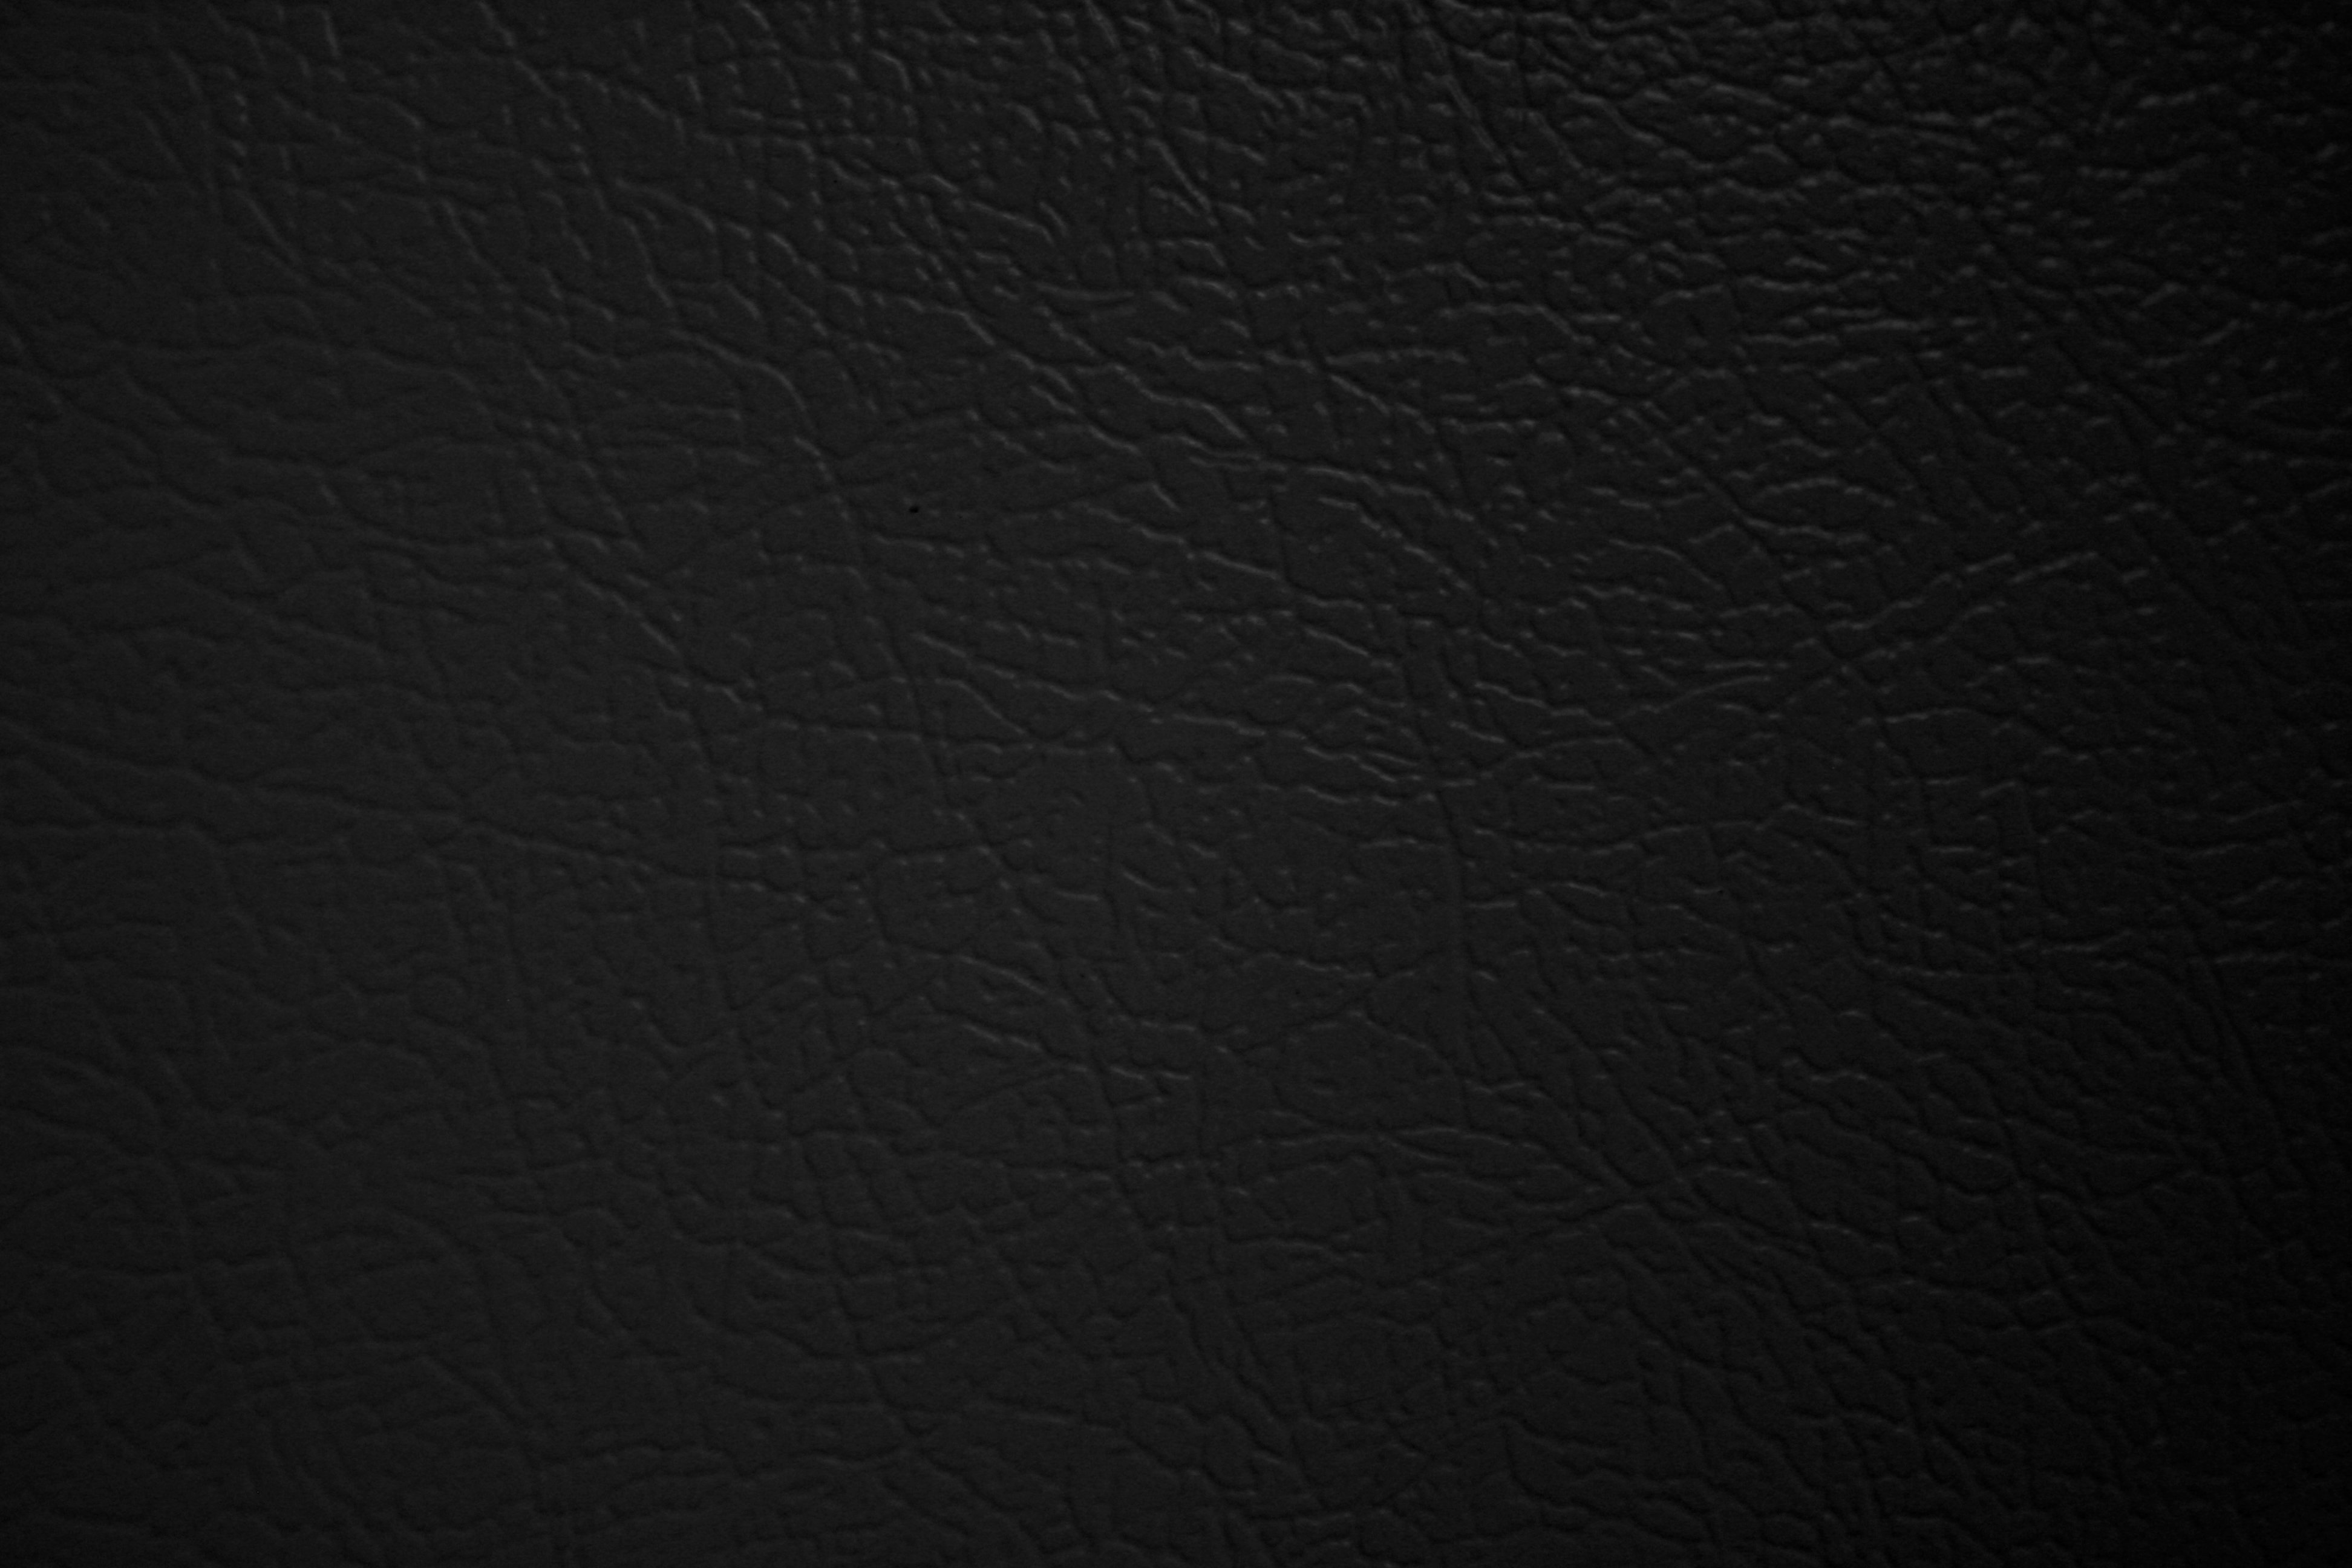 Black Leather Texture Photoshop